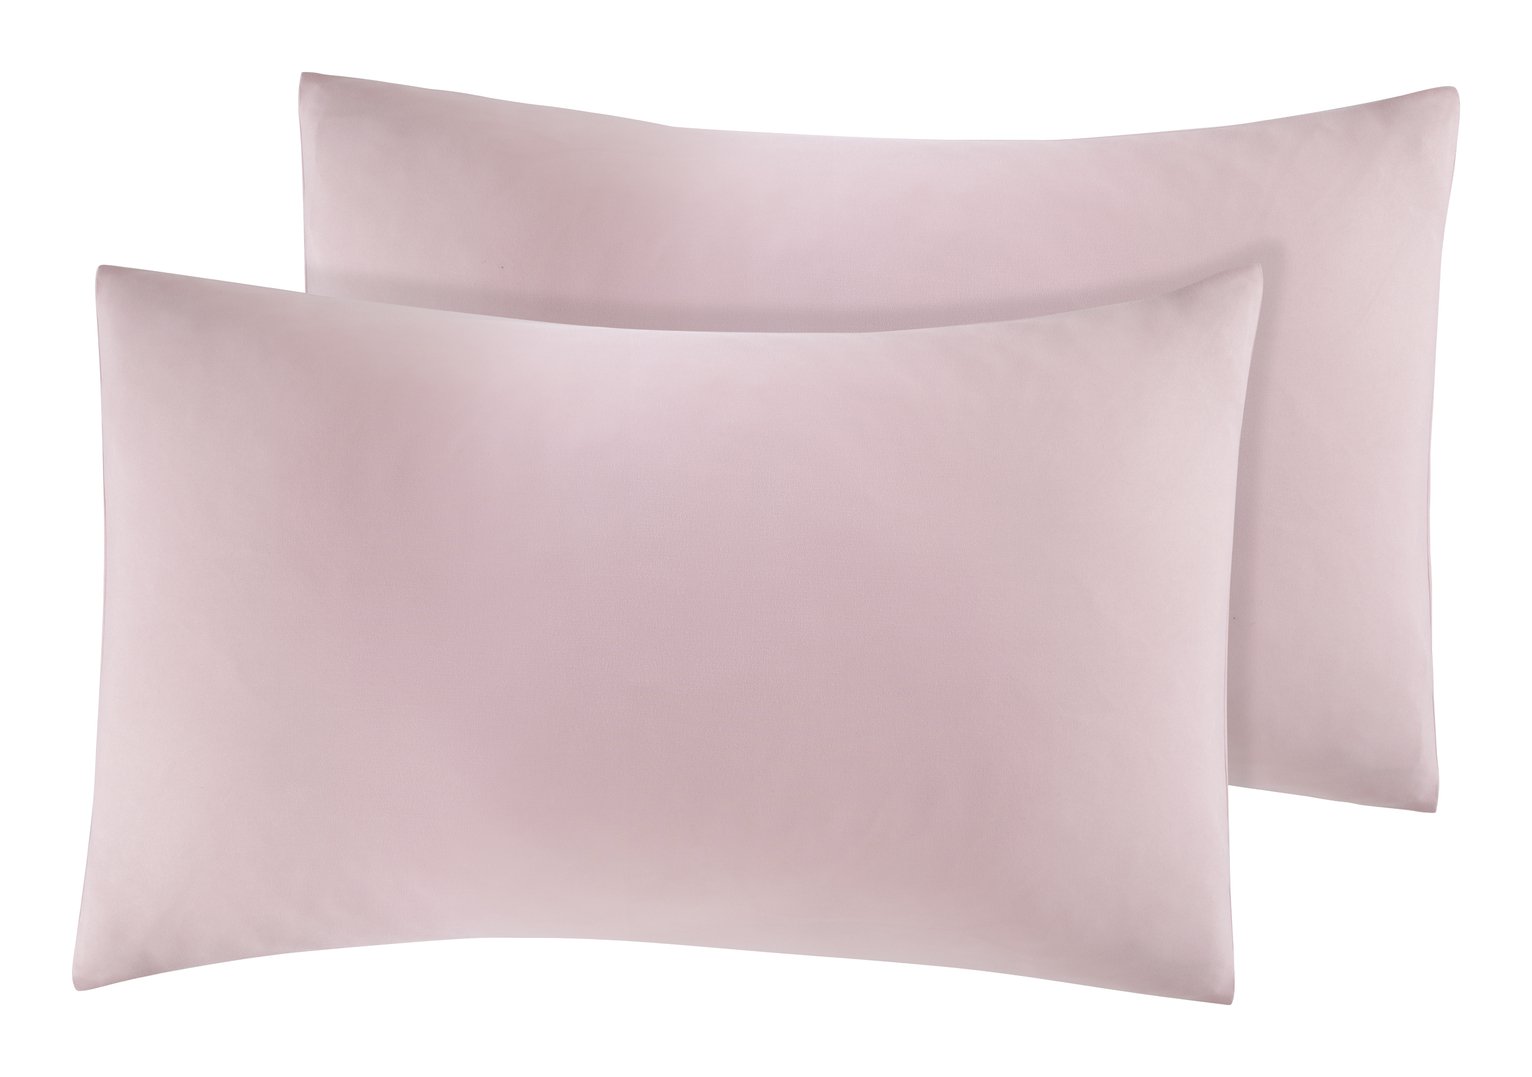 Silentnight Supersoft Standard Pillowcase Pair - Blush